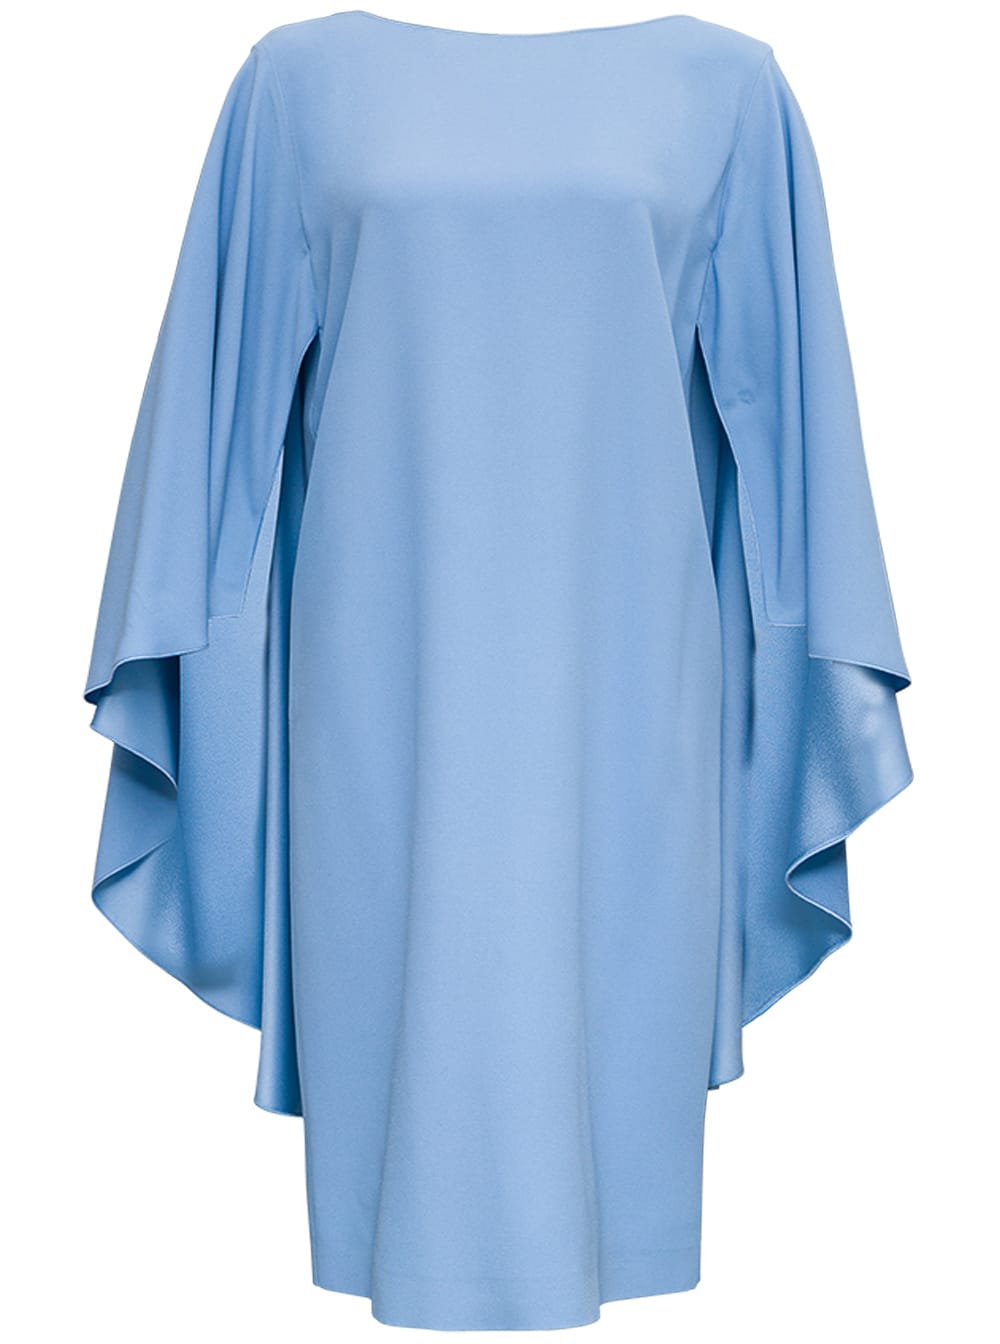 Alberta Ferretti Light Blue Viscose Blend Dress With Bow